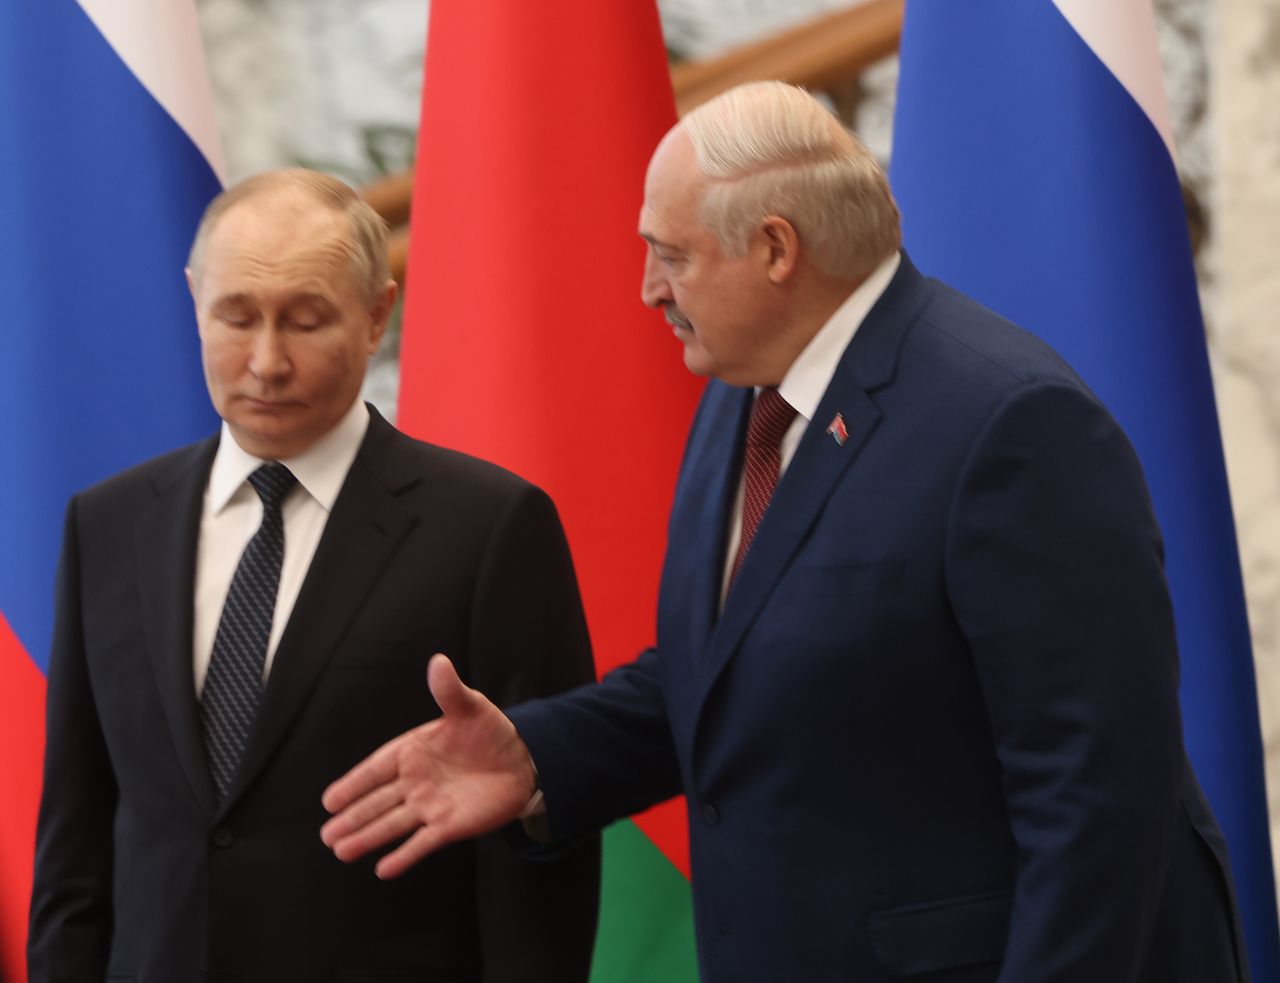 Władimir Putin and Aleksandr Lukashenko